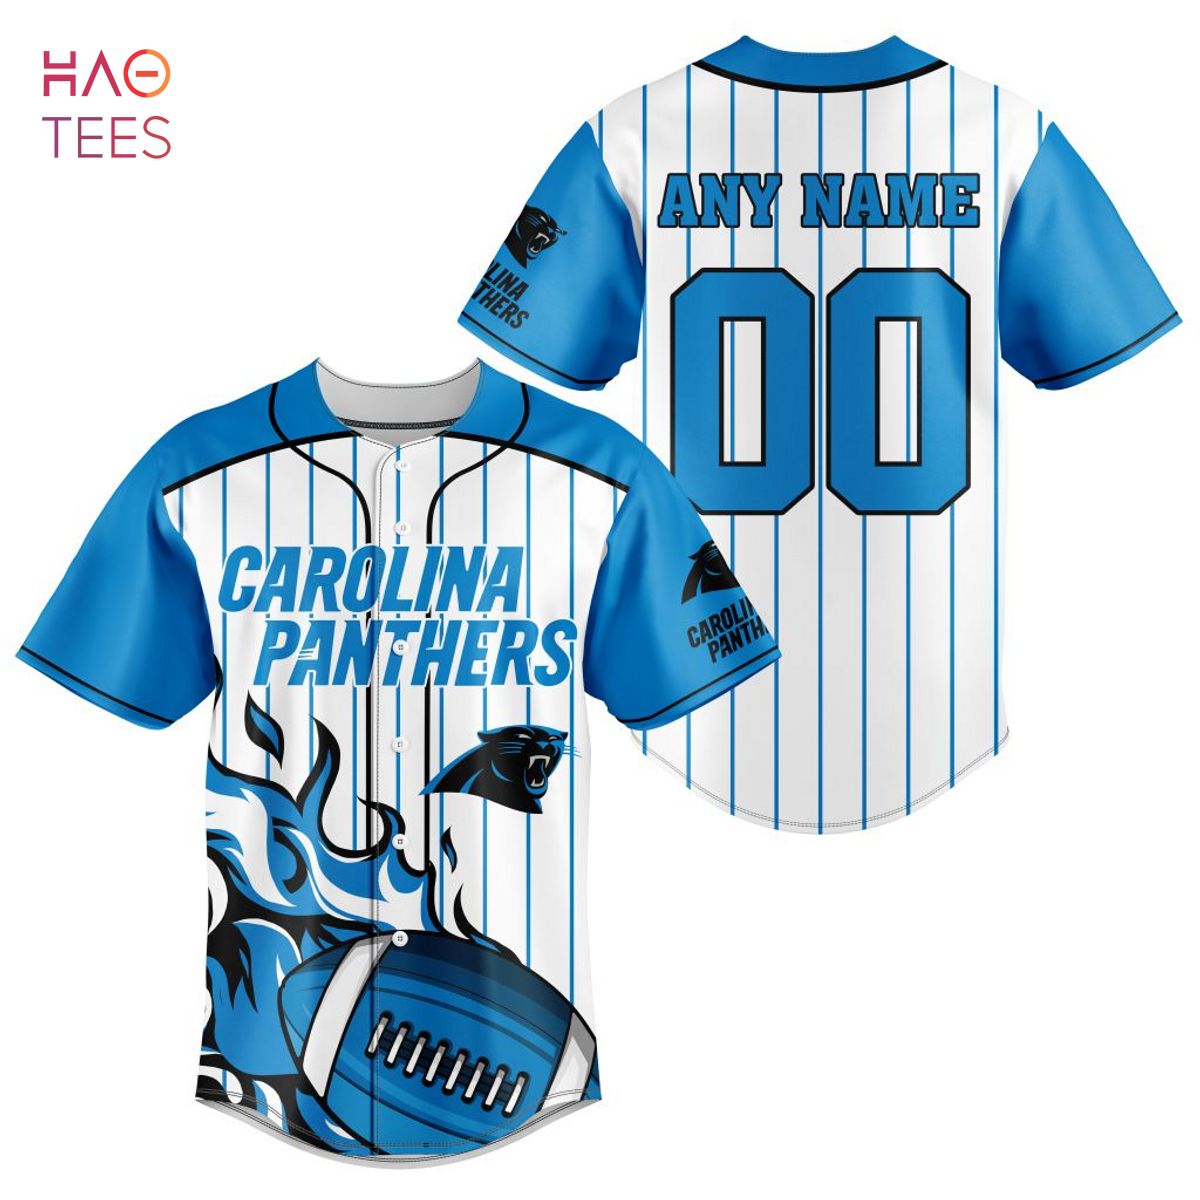 Carolina Panthers 4XL jersey